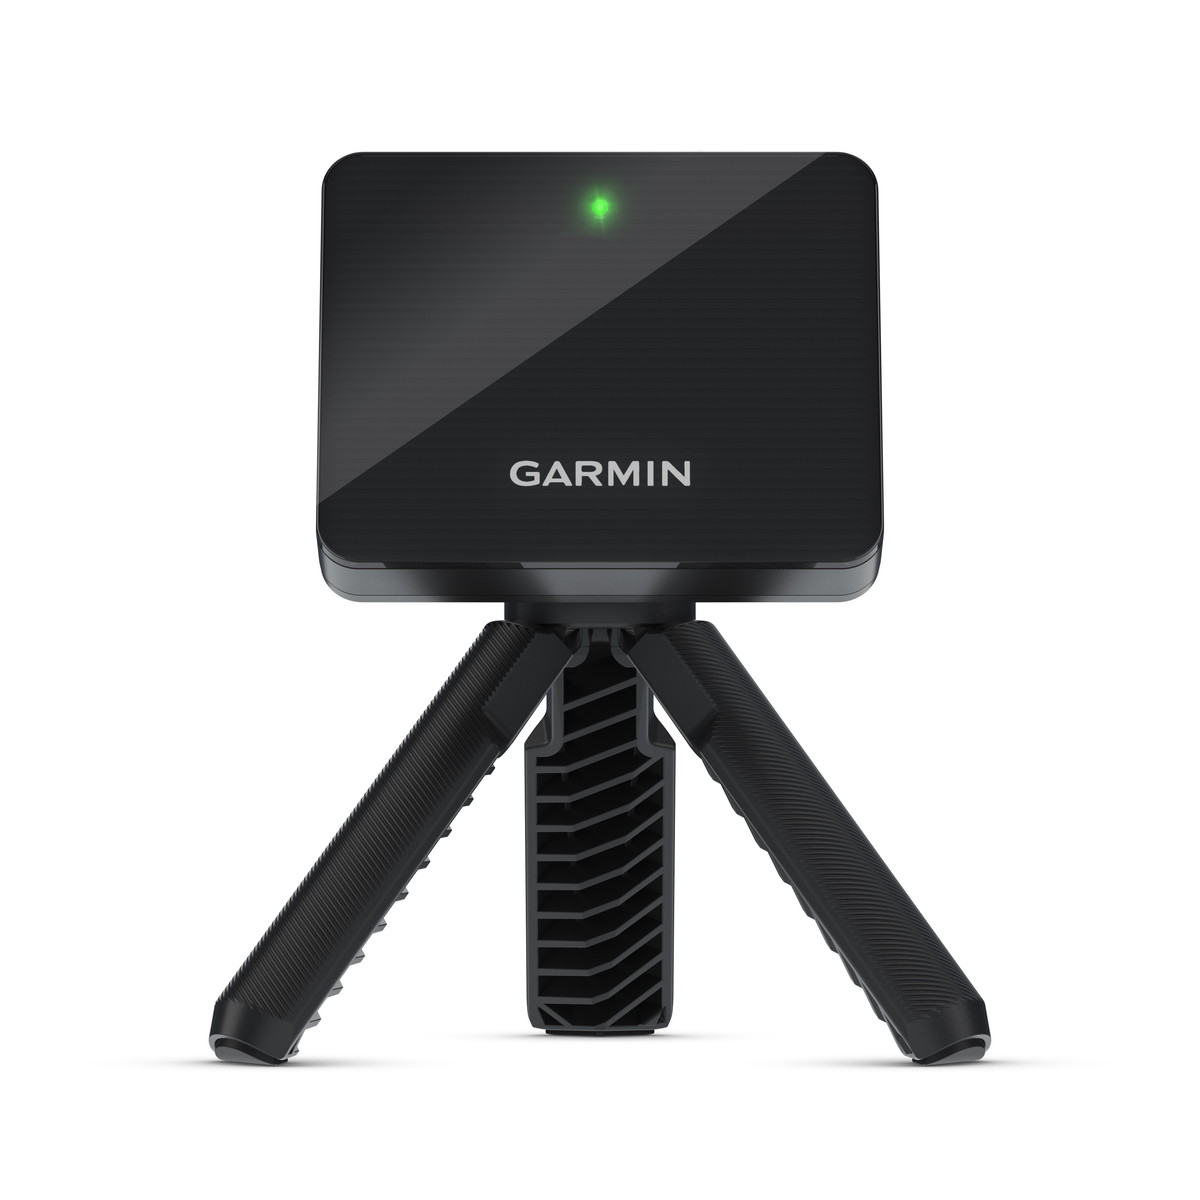 GARMIN公式直販 送料無料  GARMIN ガーミン  ポータブル弾道測定器 ゴルフシミュレーター Approach R10   010-02356-04